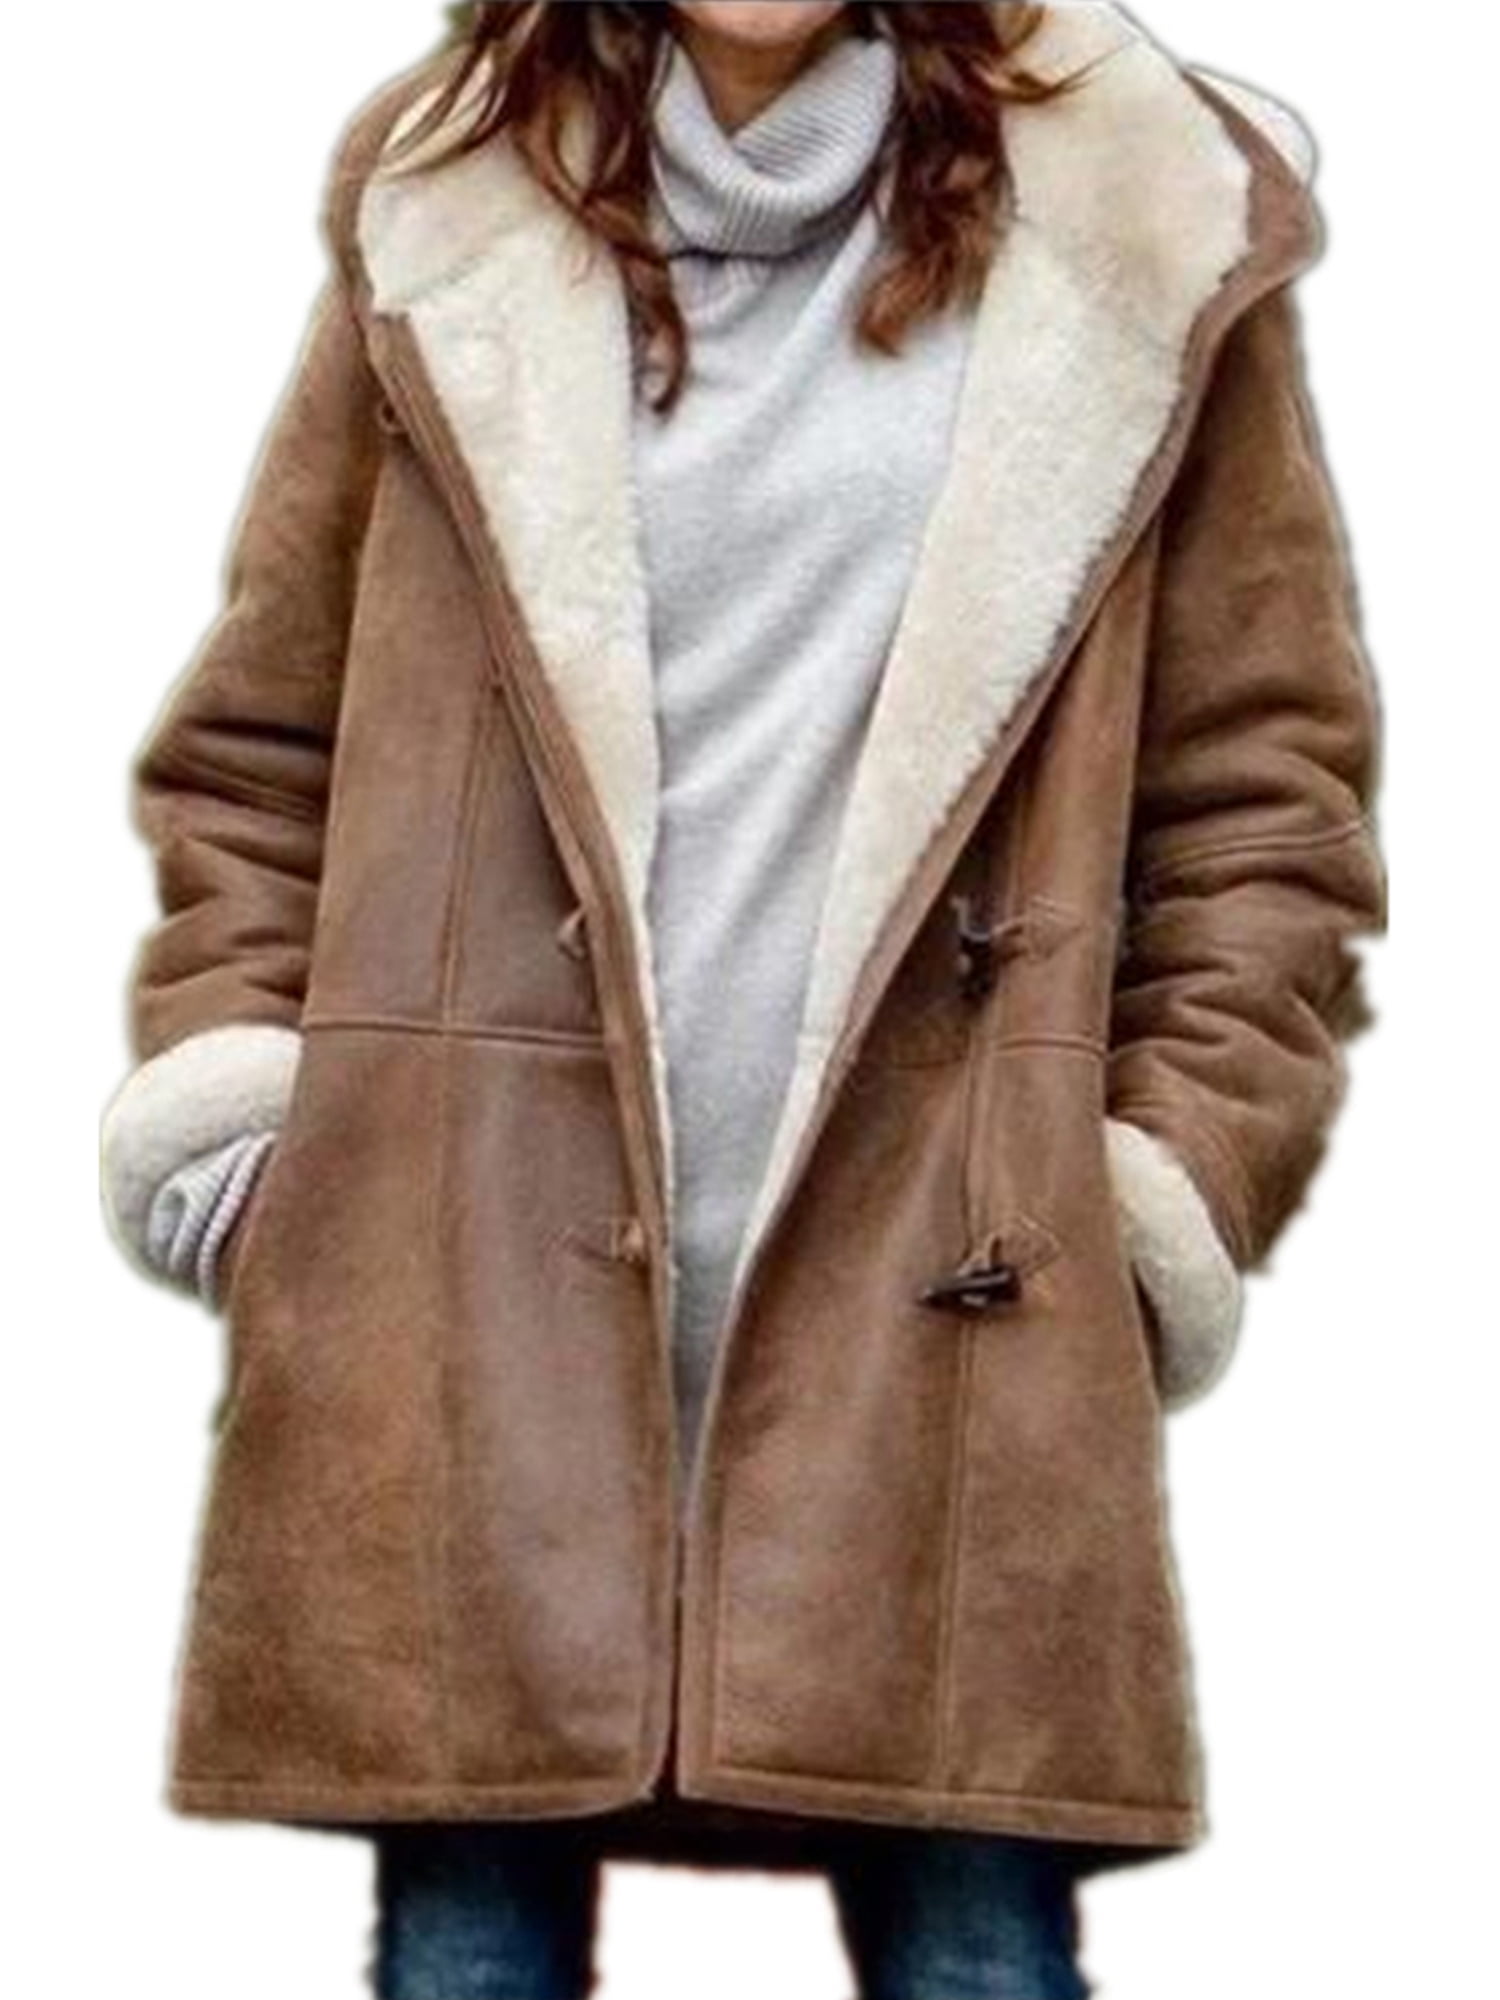 MOUTEN Mens Winter Fleece Lined Hoodie Thicken Down Quilted Coat Jacket Outwear 